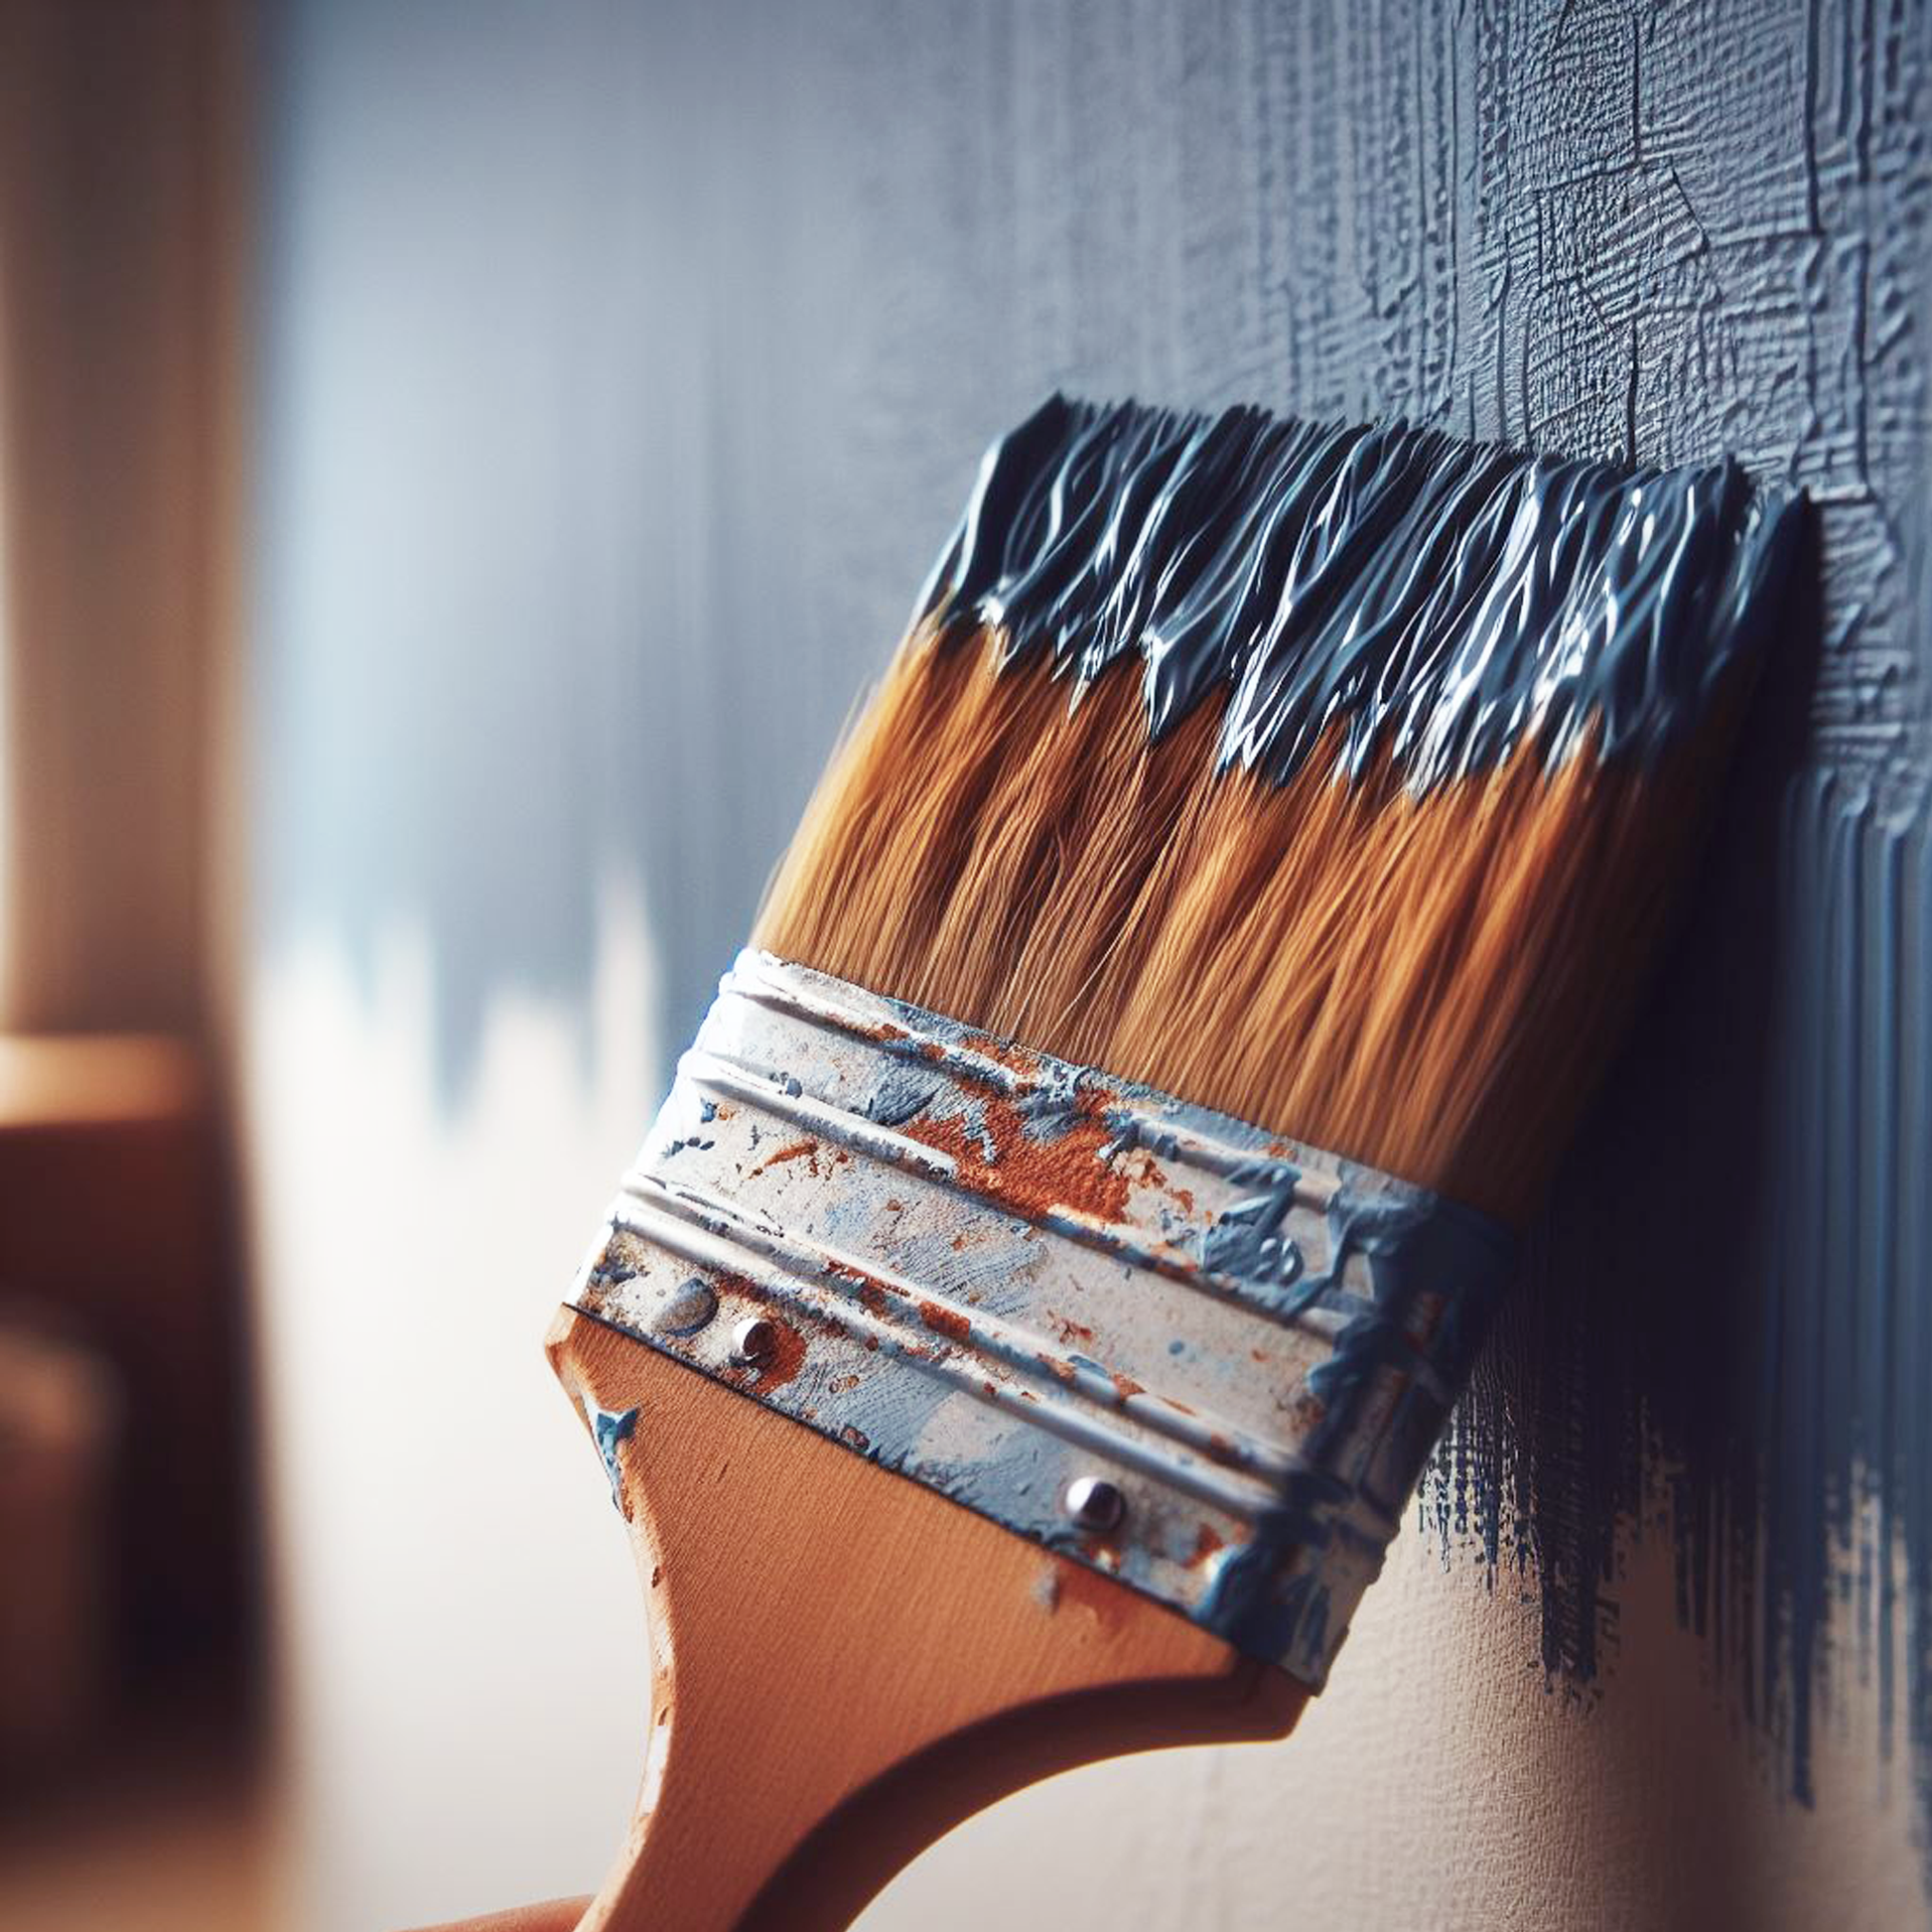 blue gaspe paint brush